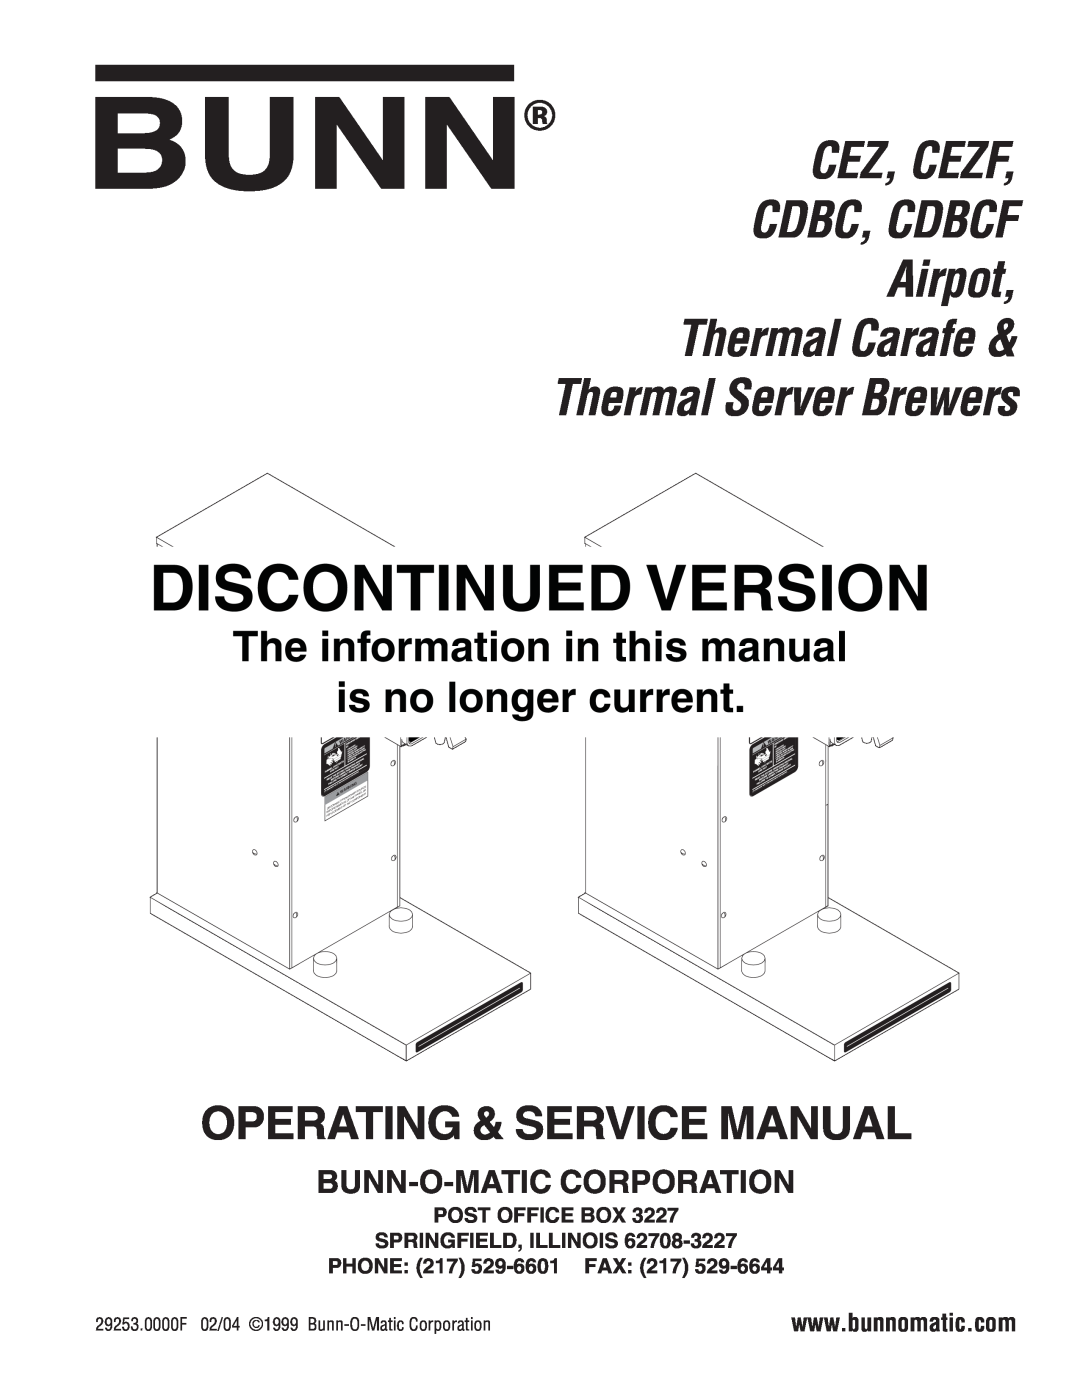 Bunn CEZF service manual Bunn-O-Maticcorporation, Post Office Box Springfield, Illinois, Phone, Fax, Discontinued Version 